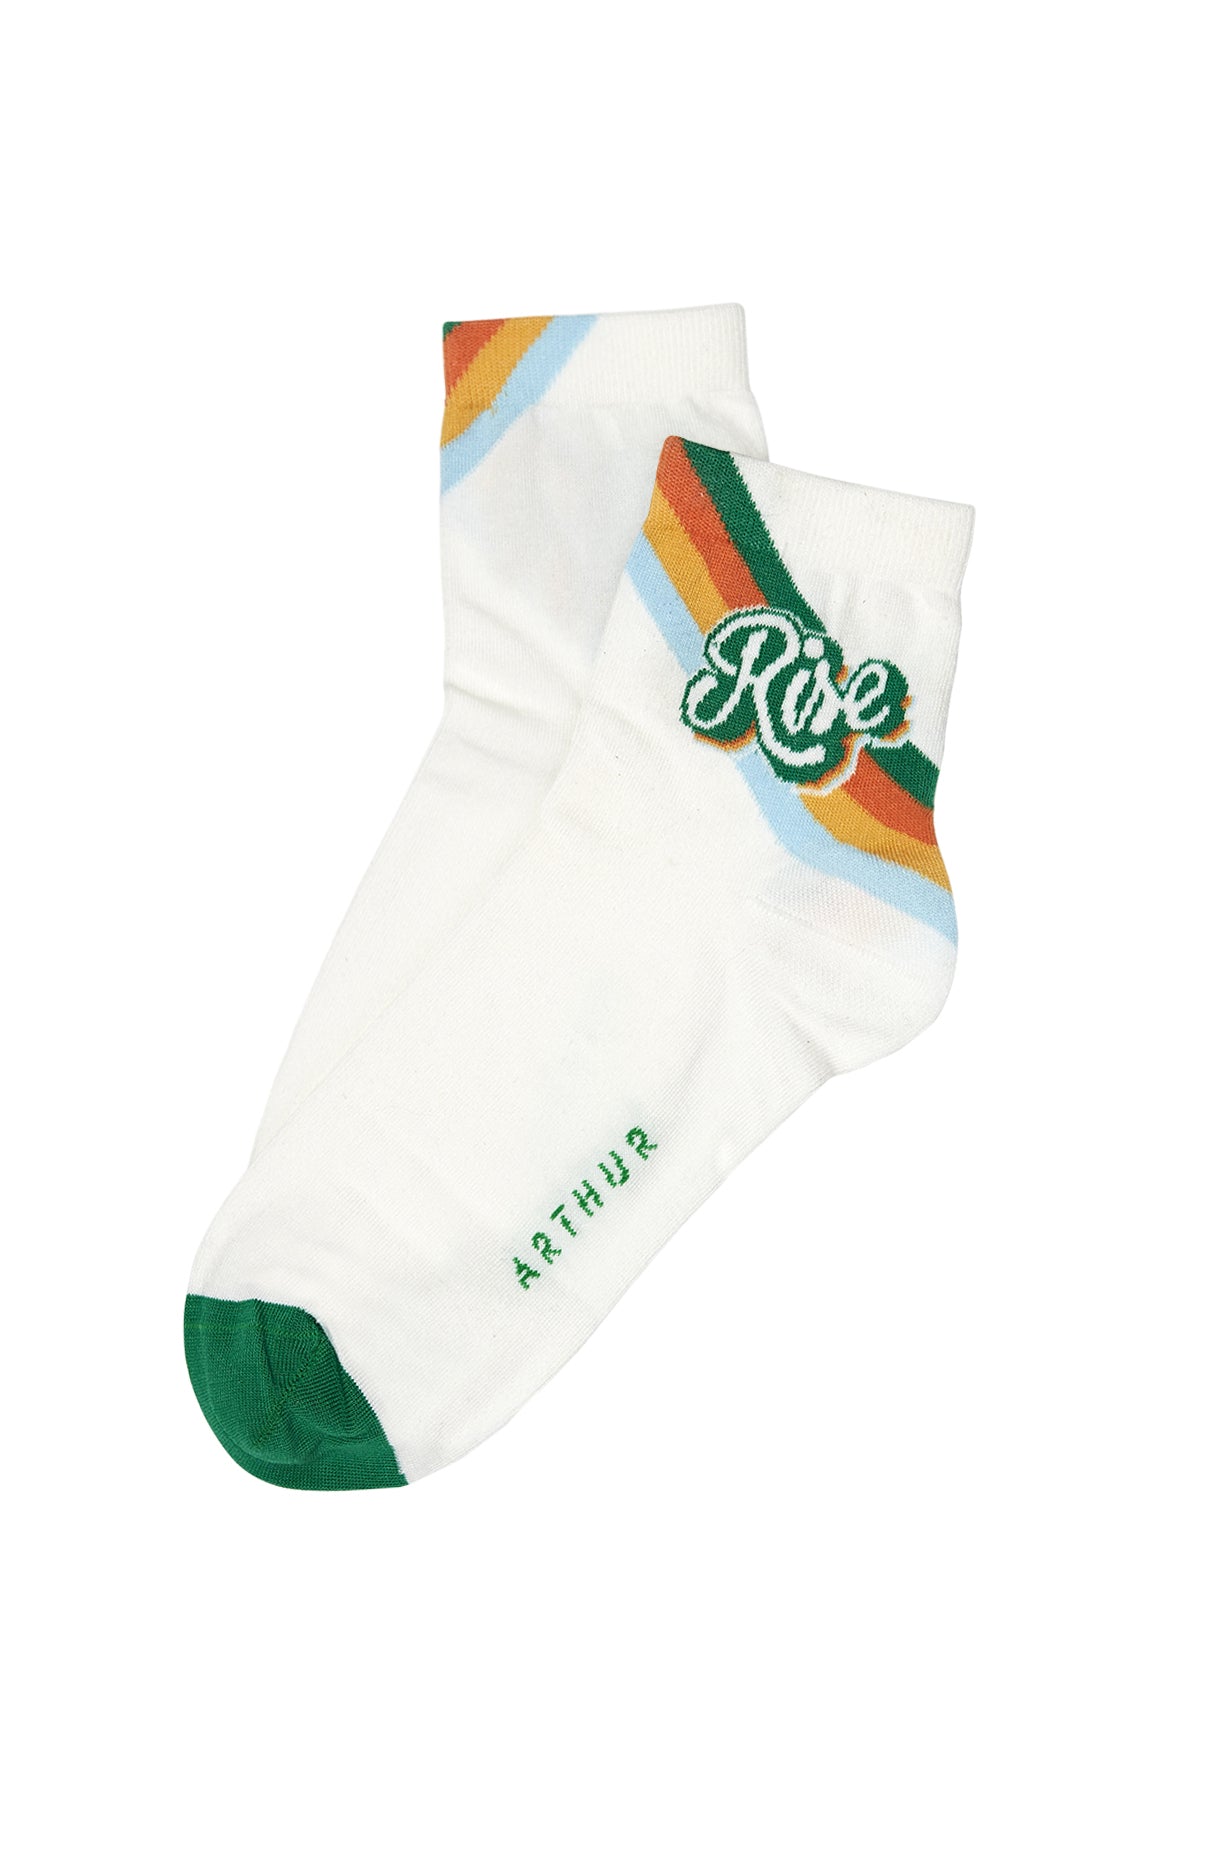 Rise socks